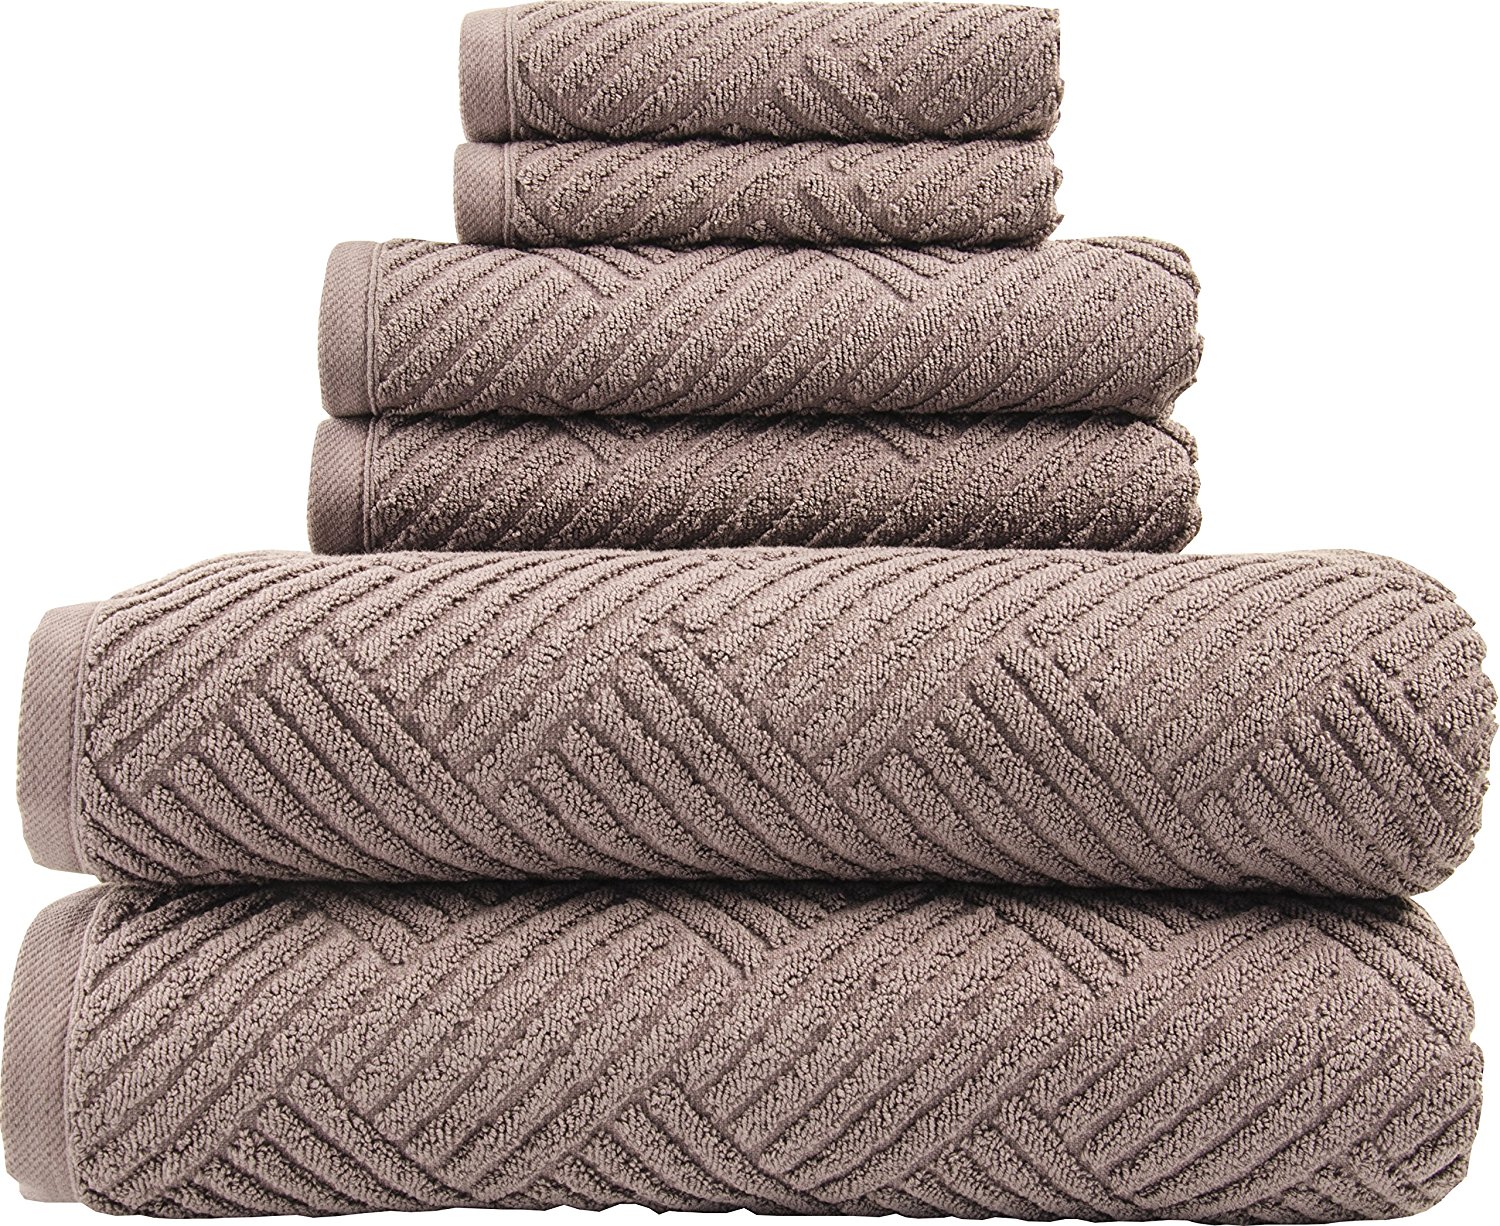 Smyrna Basket Weave Turkish Cotton Towel Set ?quality=65&strip=all